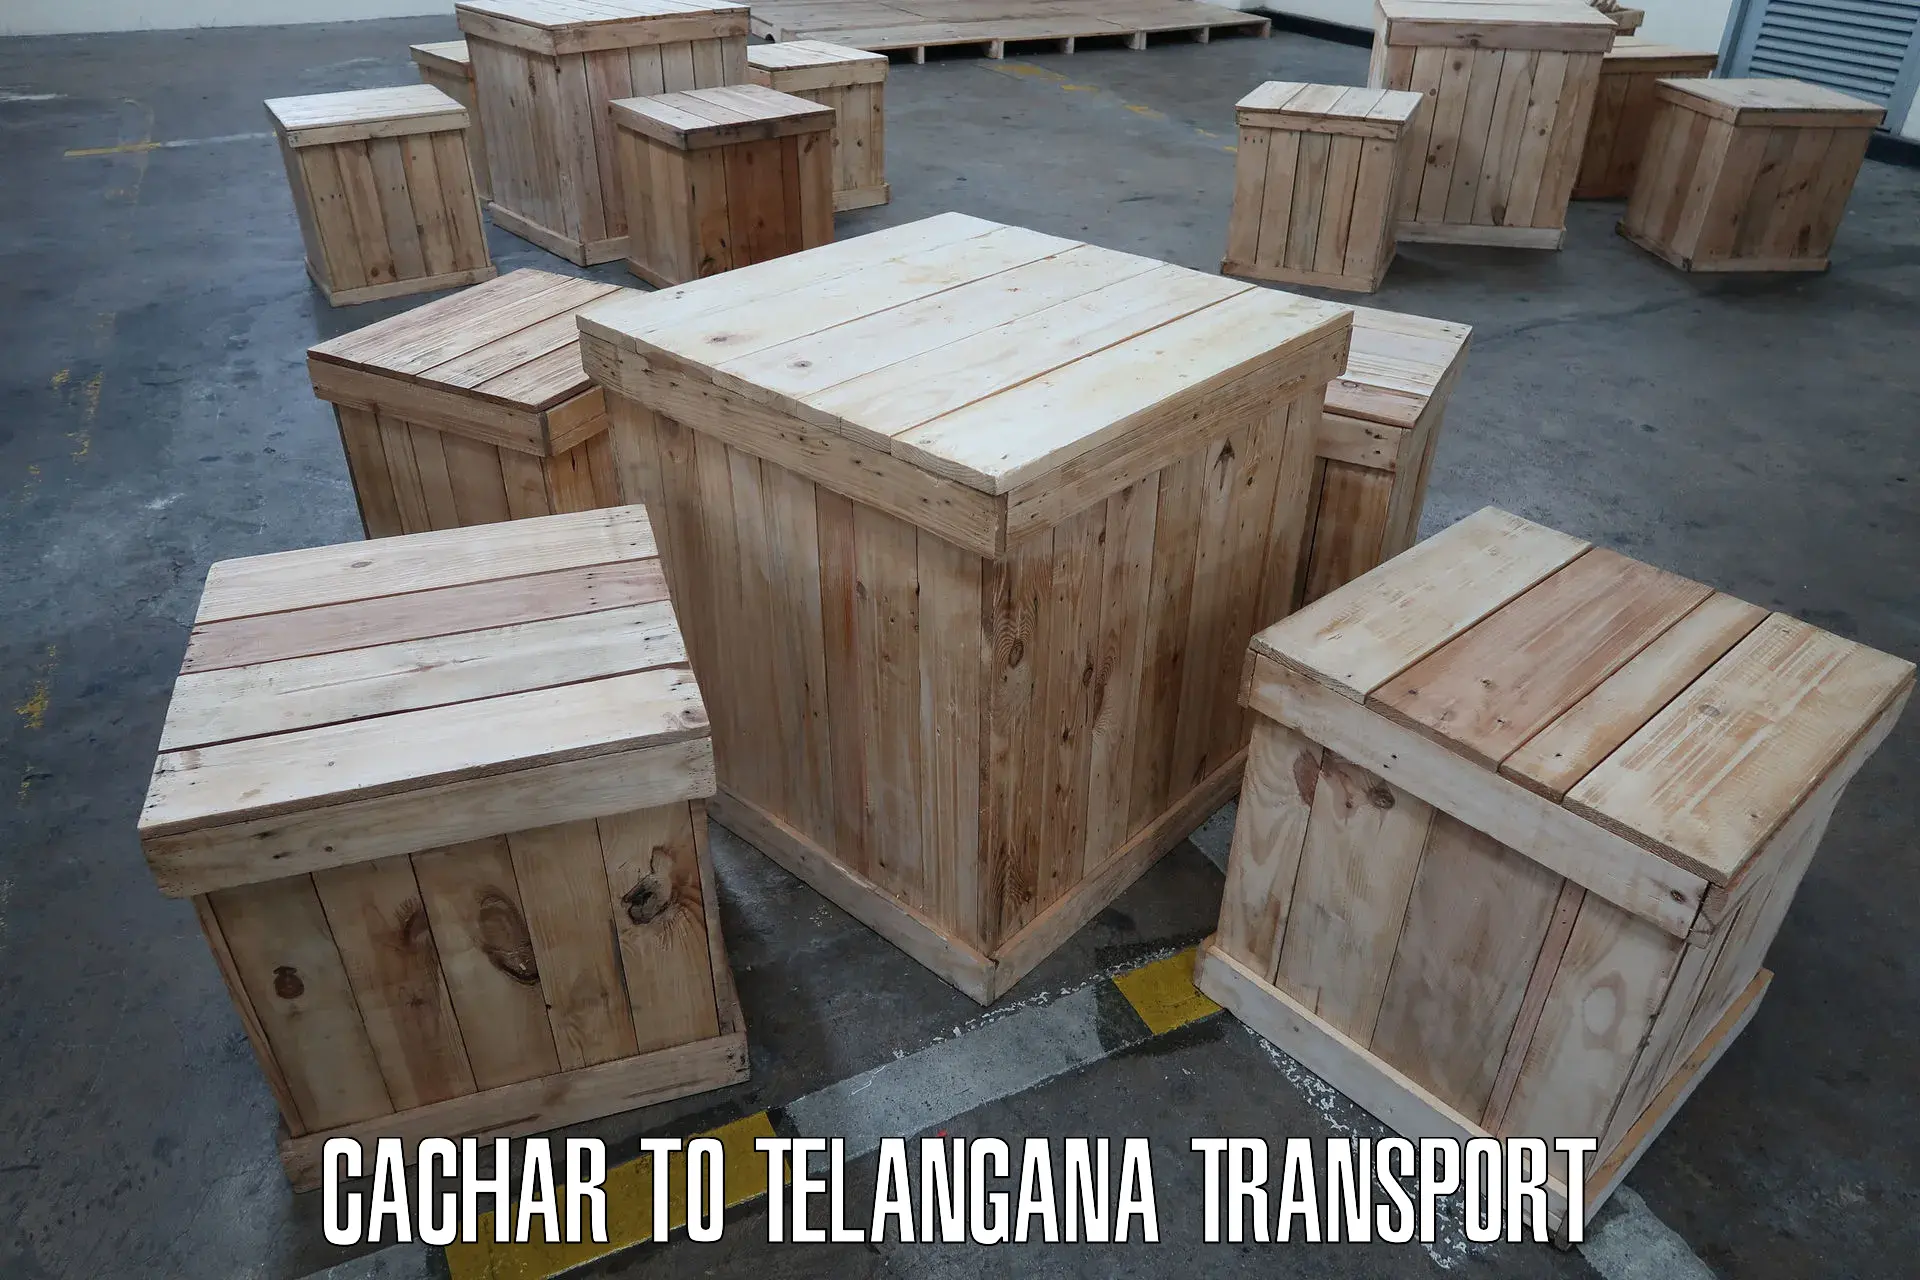 Transport services Cachar to Gangadhara